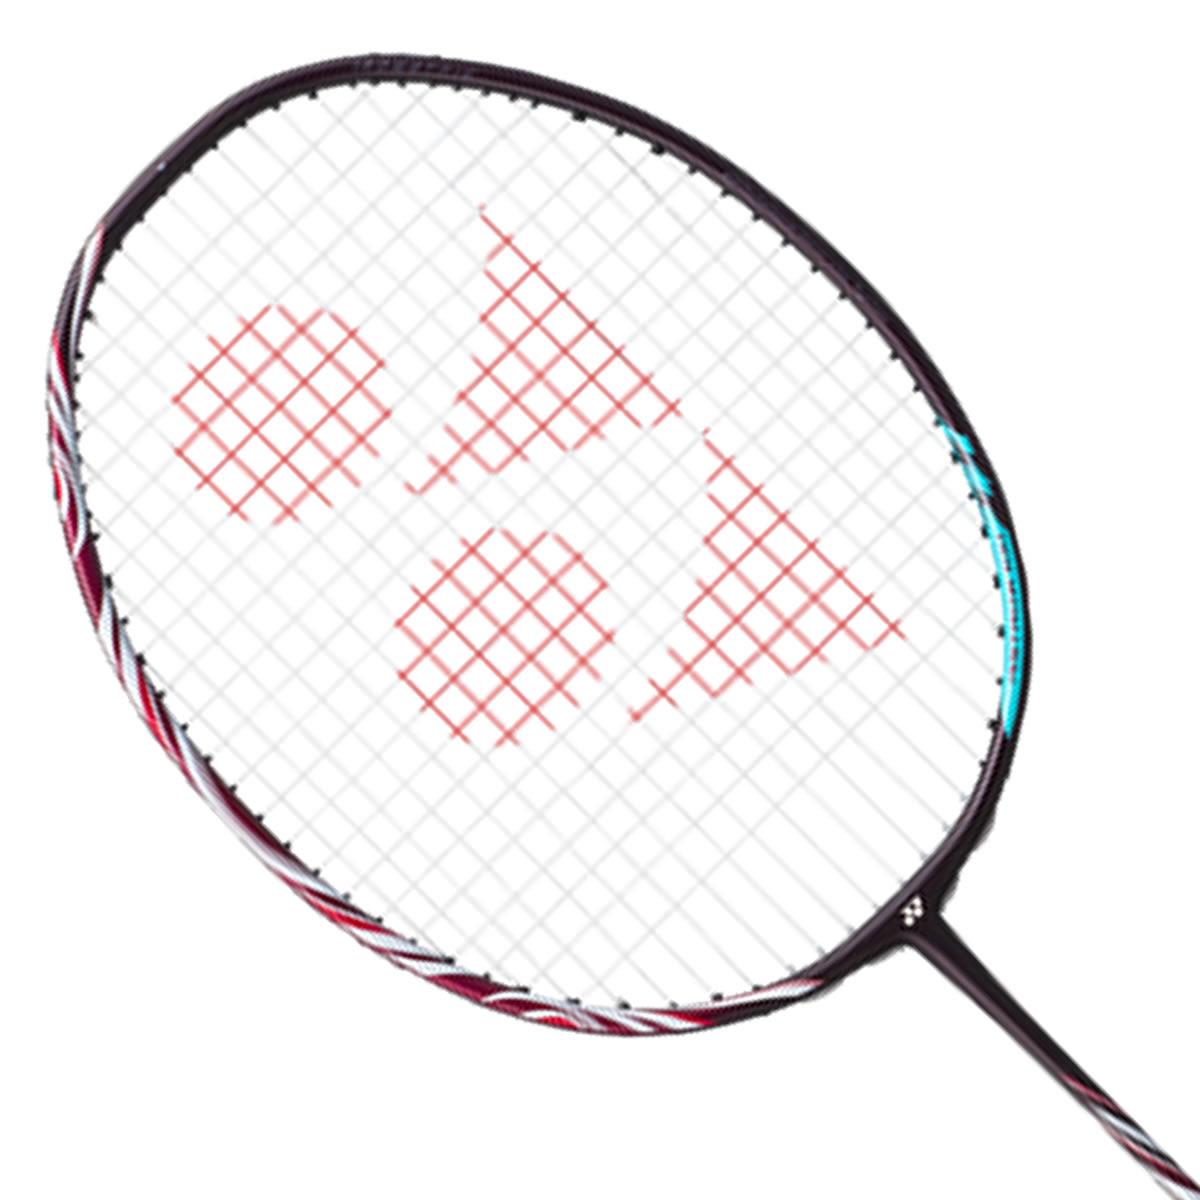 Yonex Astrox 100 ZZ Kurenai 4U Badminton Racket - Crimson Red - Head